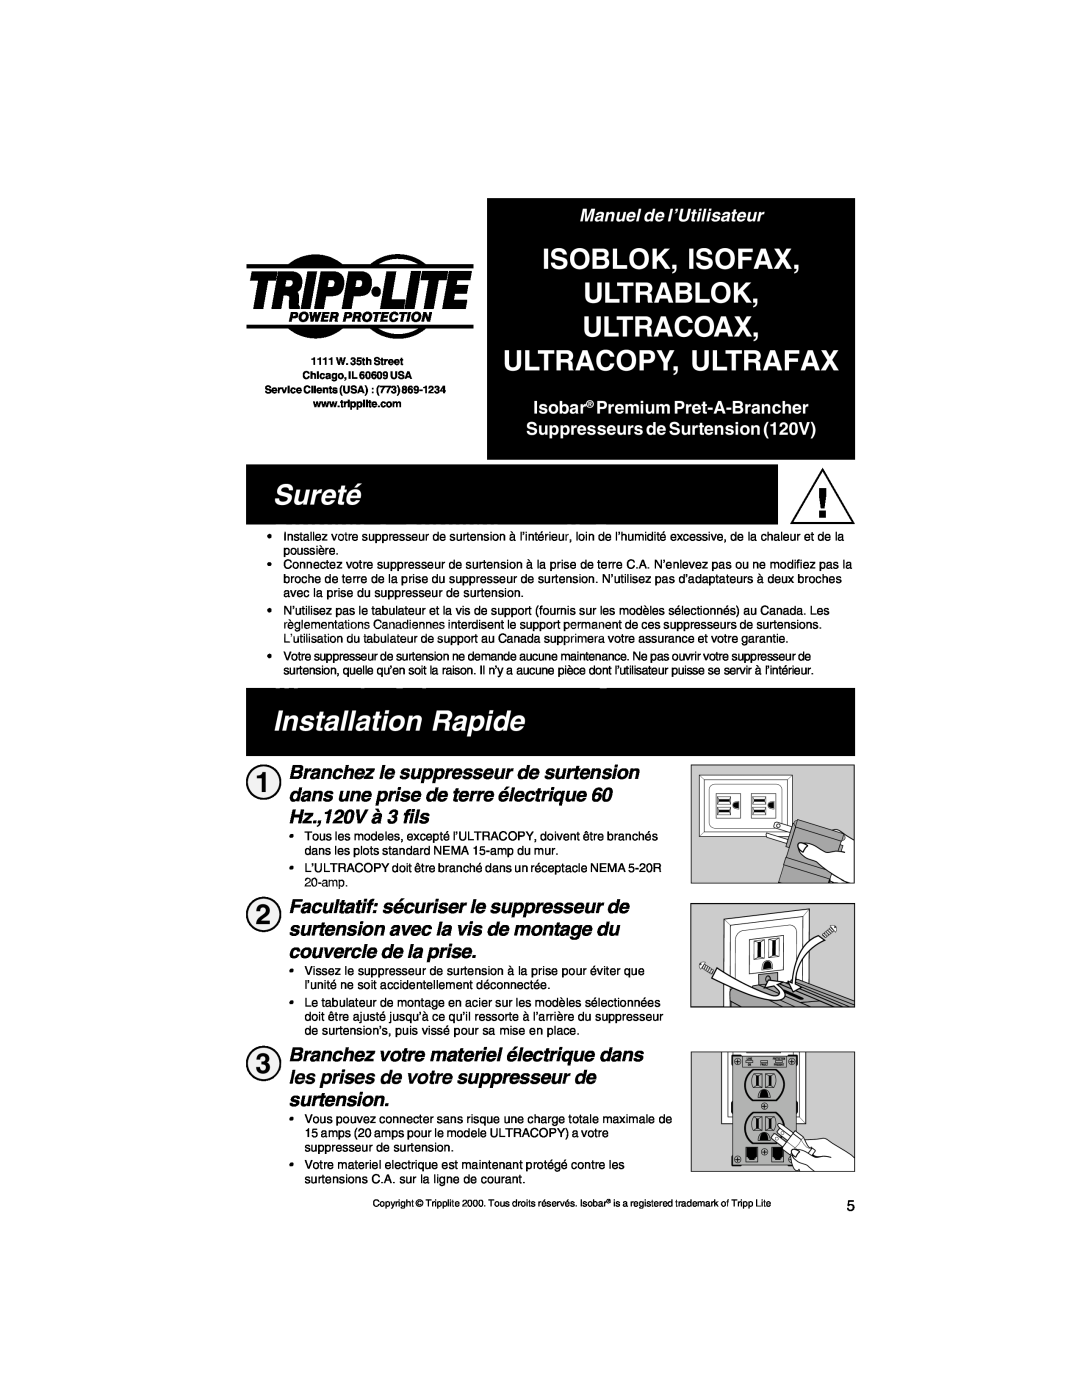 Tripp Lite ULTRABLOK Isoblok, Isofax Ultrablok Ultracoax Ultracopy, Ultrafax, Sureté, Installation Rapide, surtension 